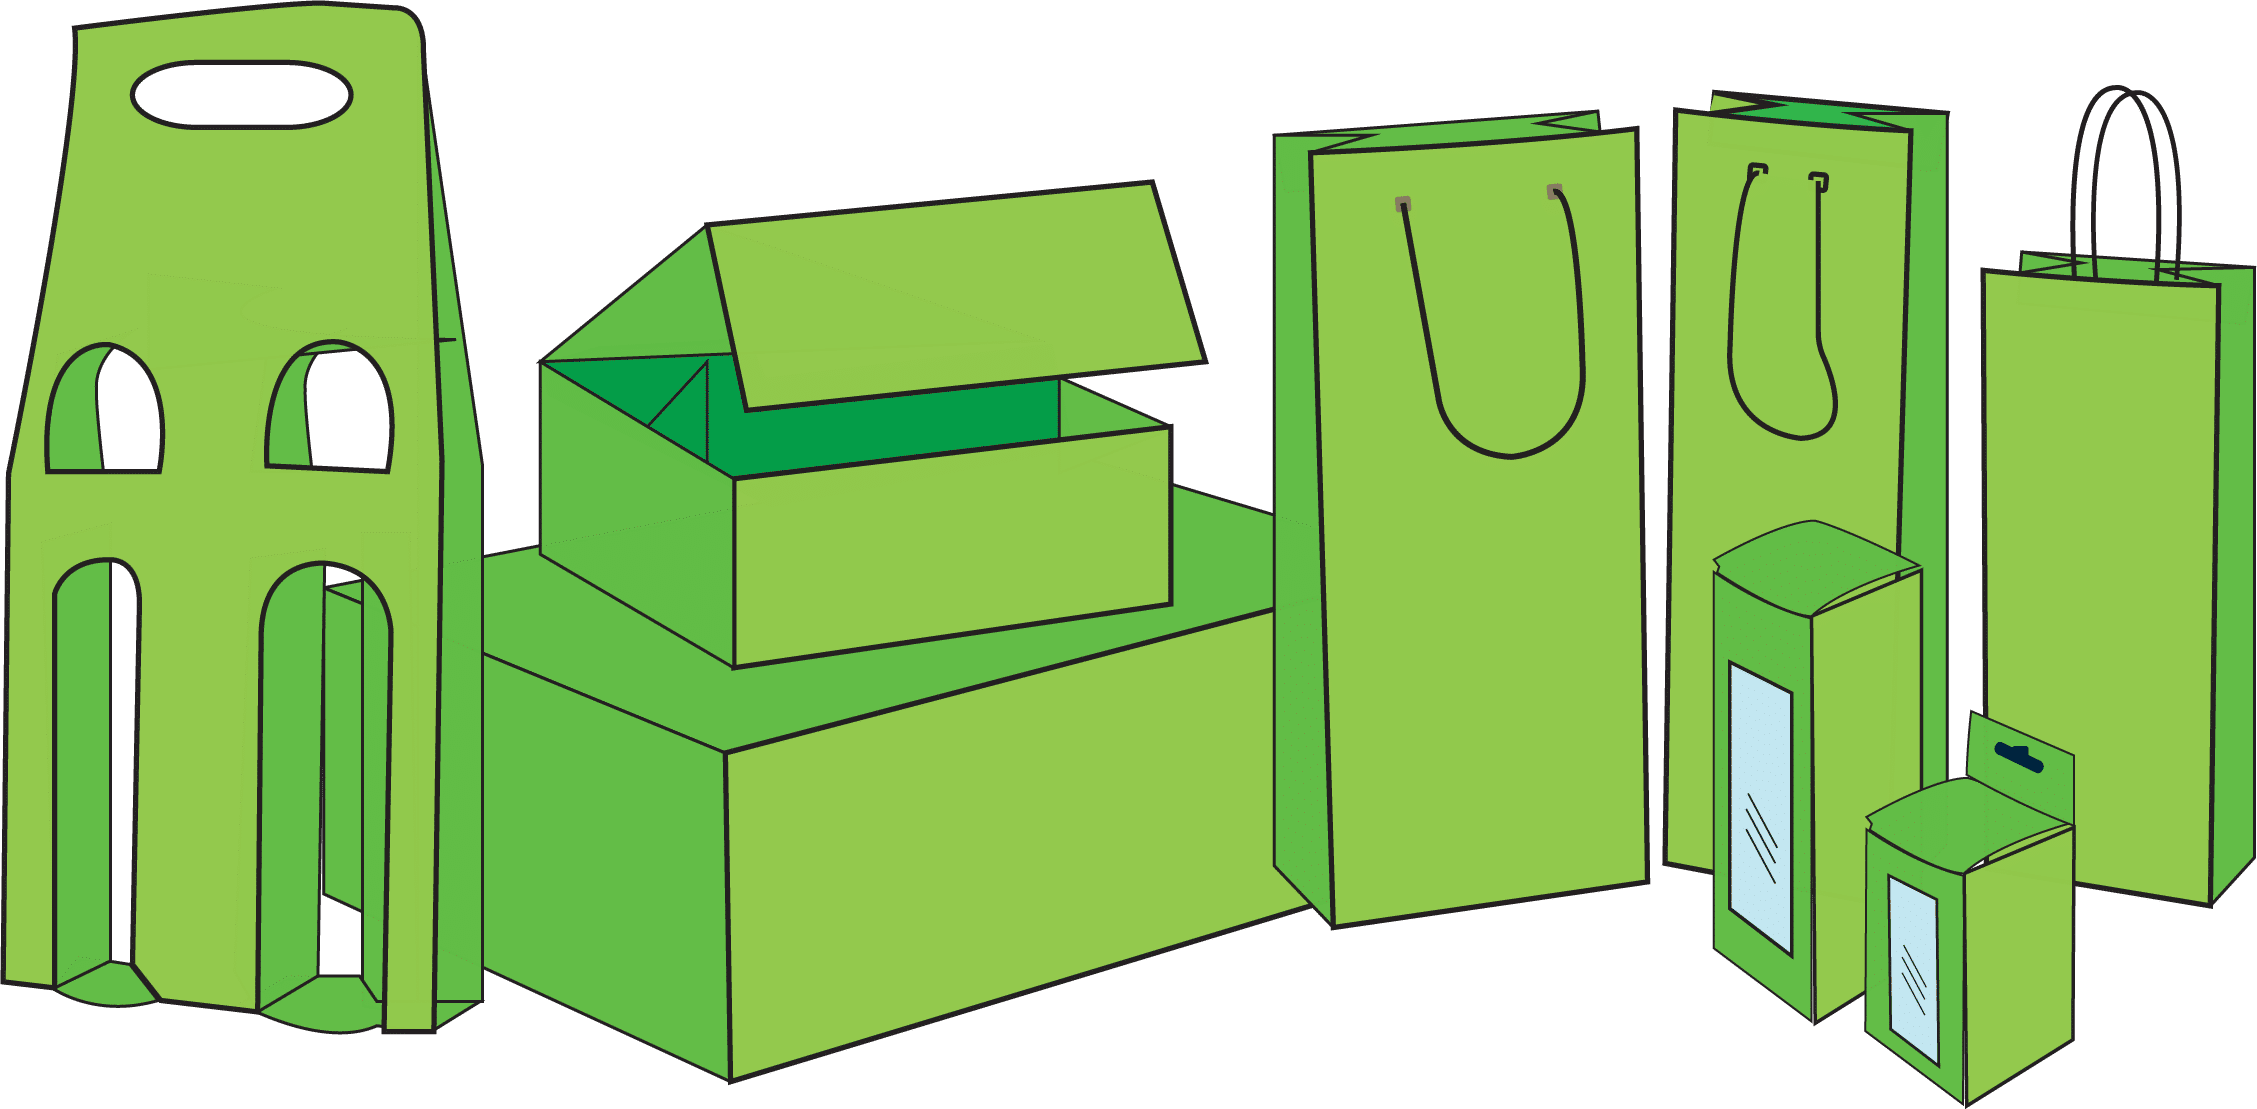 Composizione illustrata di vari tipi di packaging verdi